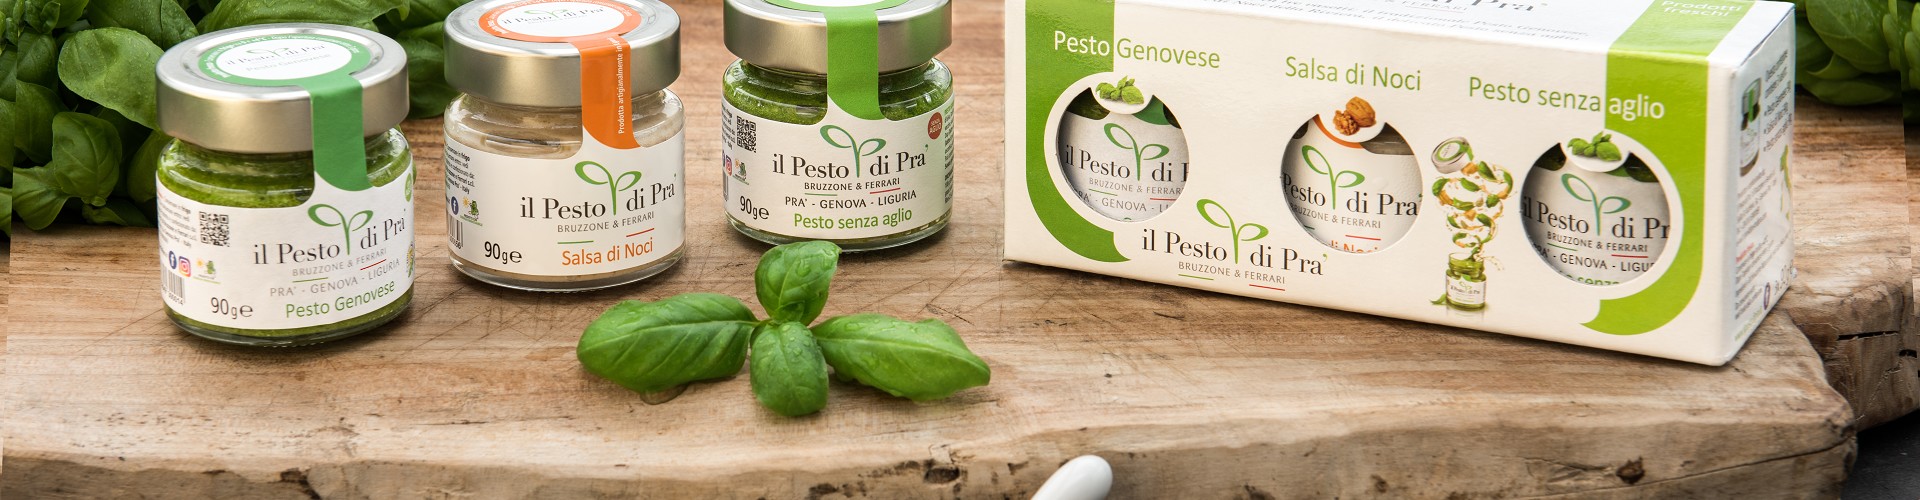 Original Genoa Pesto Online Shop | Classic Basil Pesto | Pesto Sauce Brands | Canned Pesto